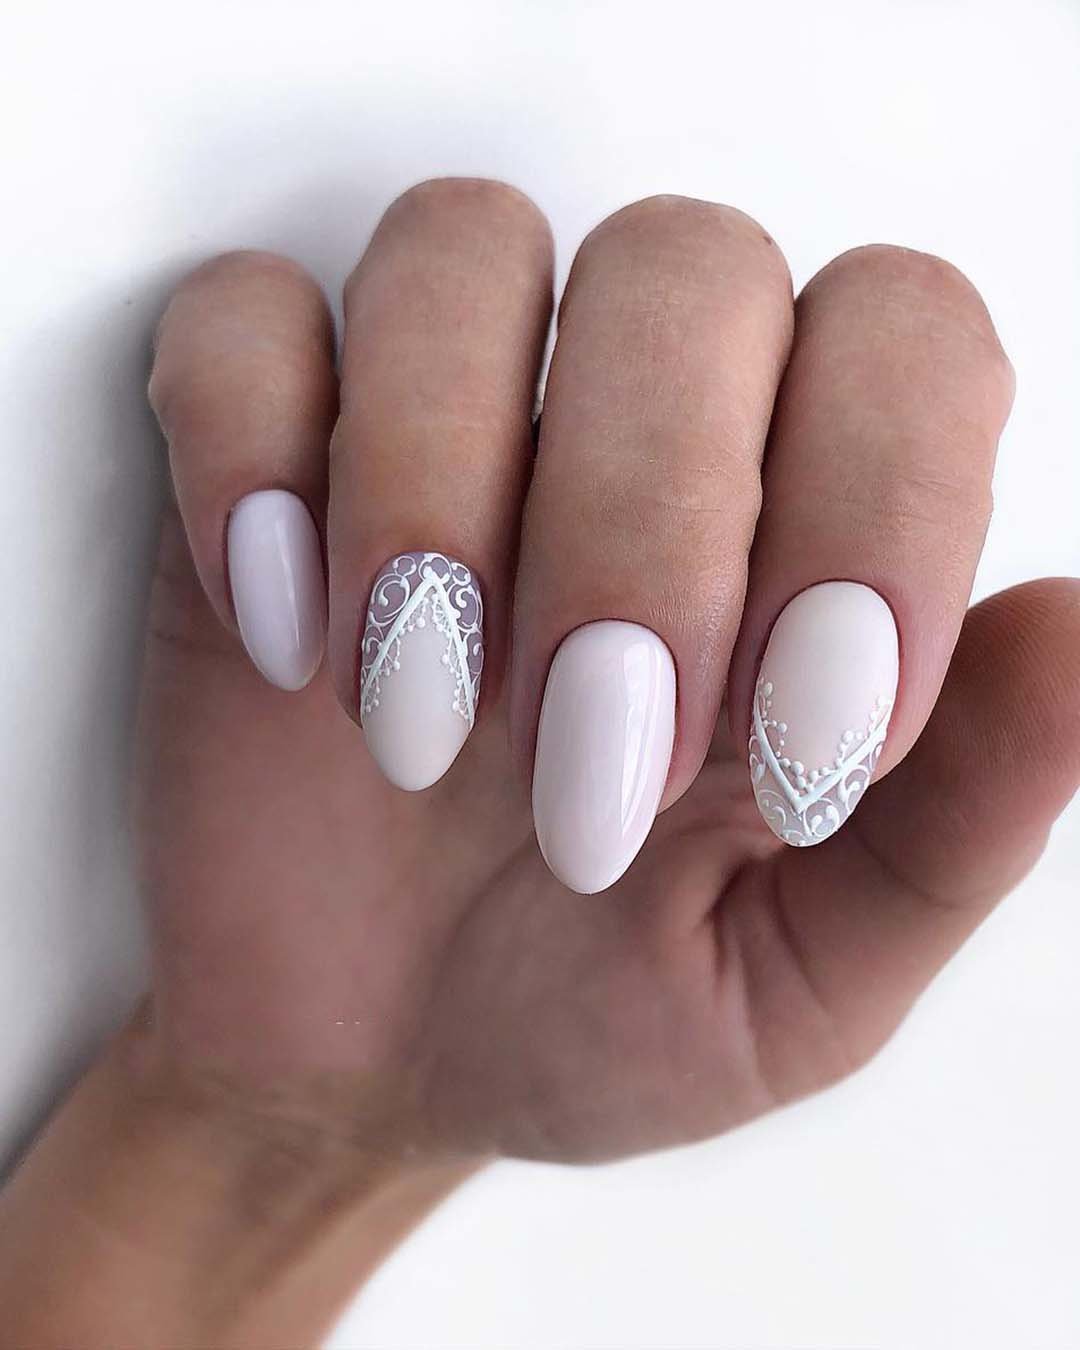 pinterest nails white pink with lace decor nailartist_natali